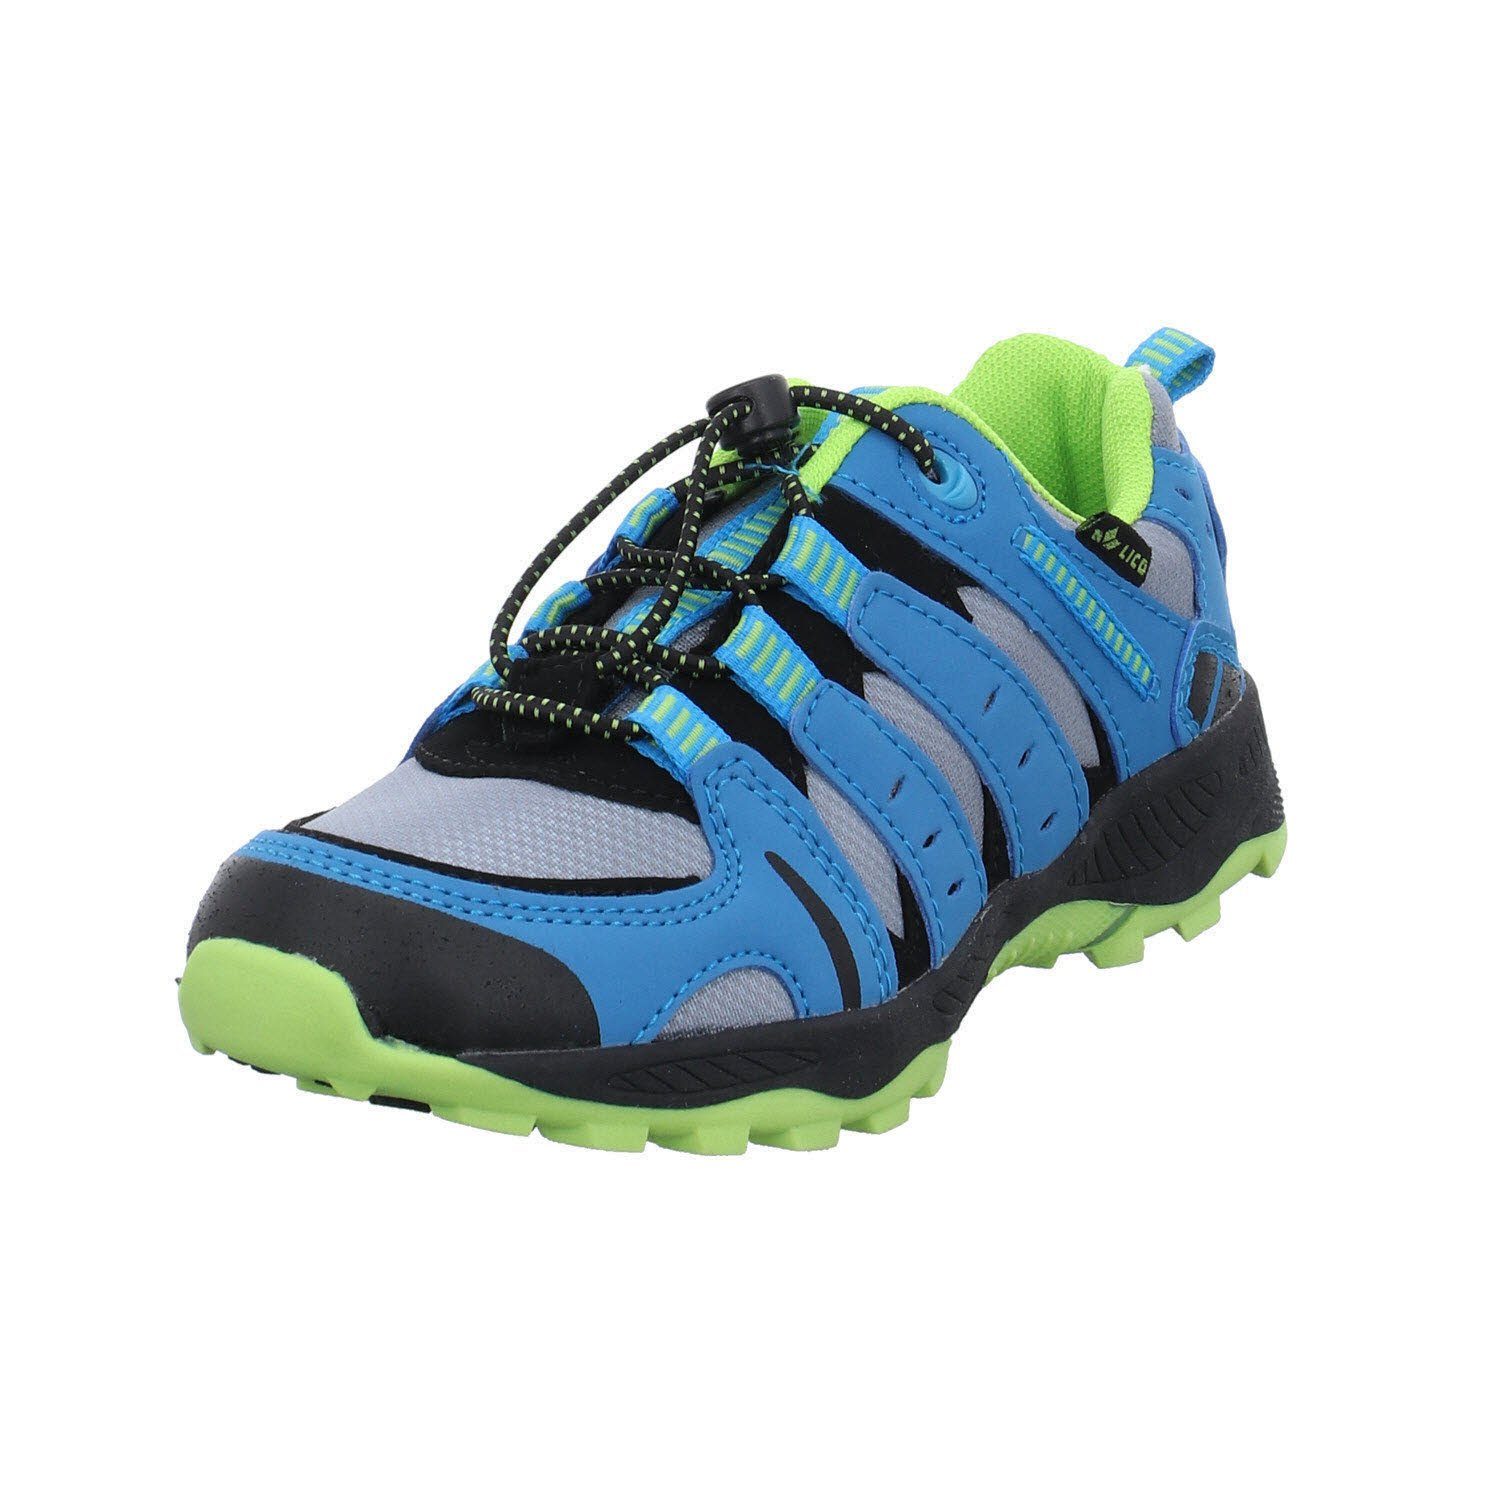 Lico »Schuhe Kinderschuhe Outdoor Wandern« Outdoorschuh online kaufen | OTTO